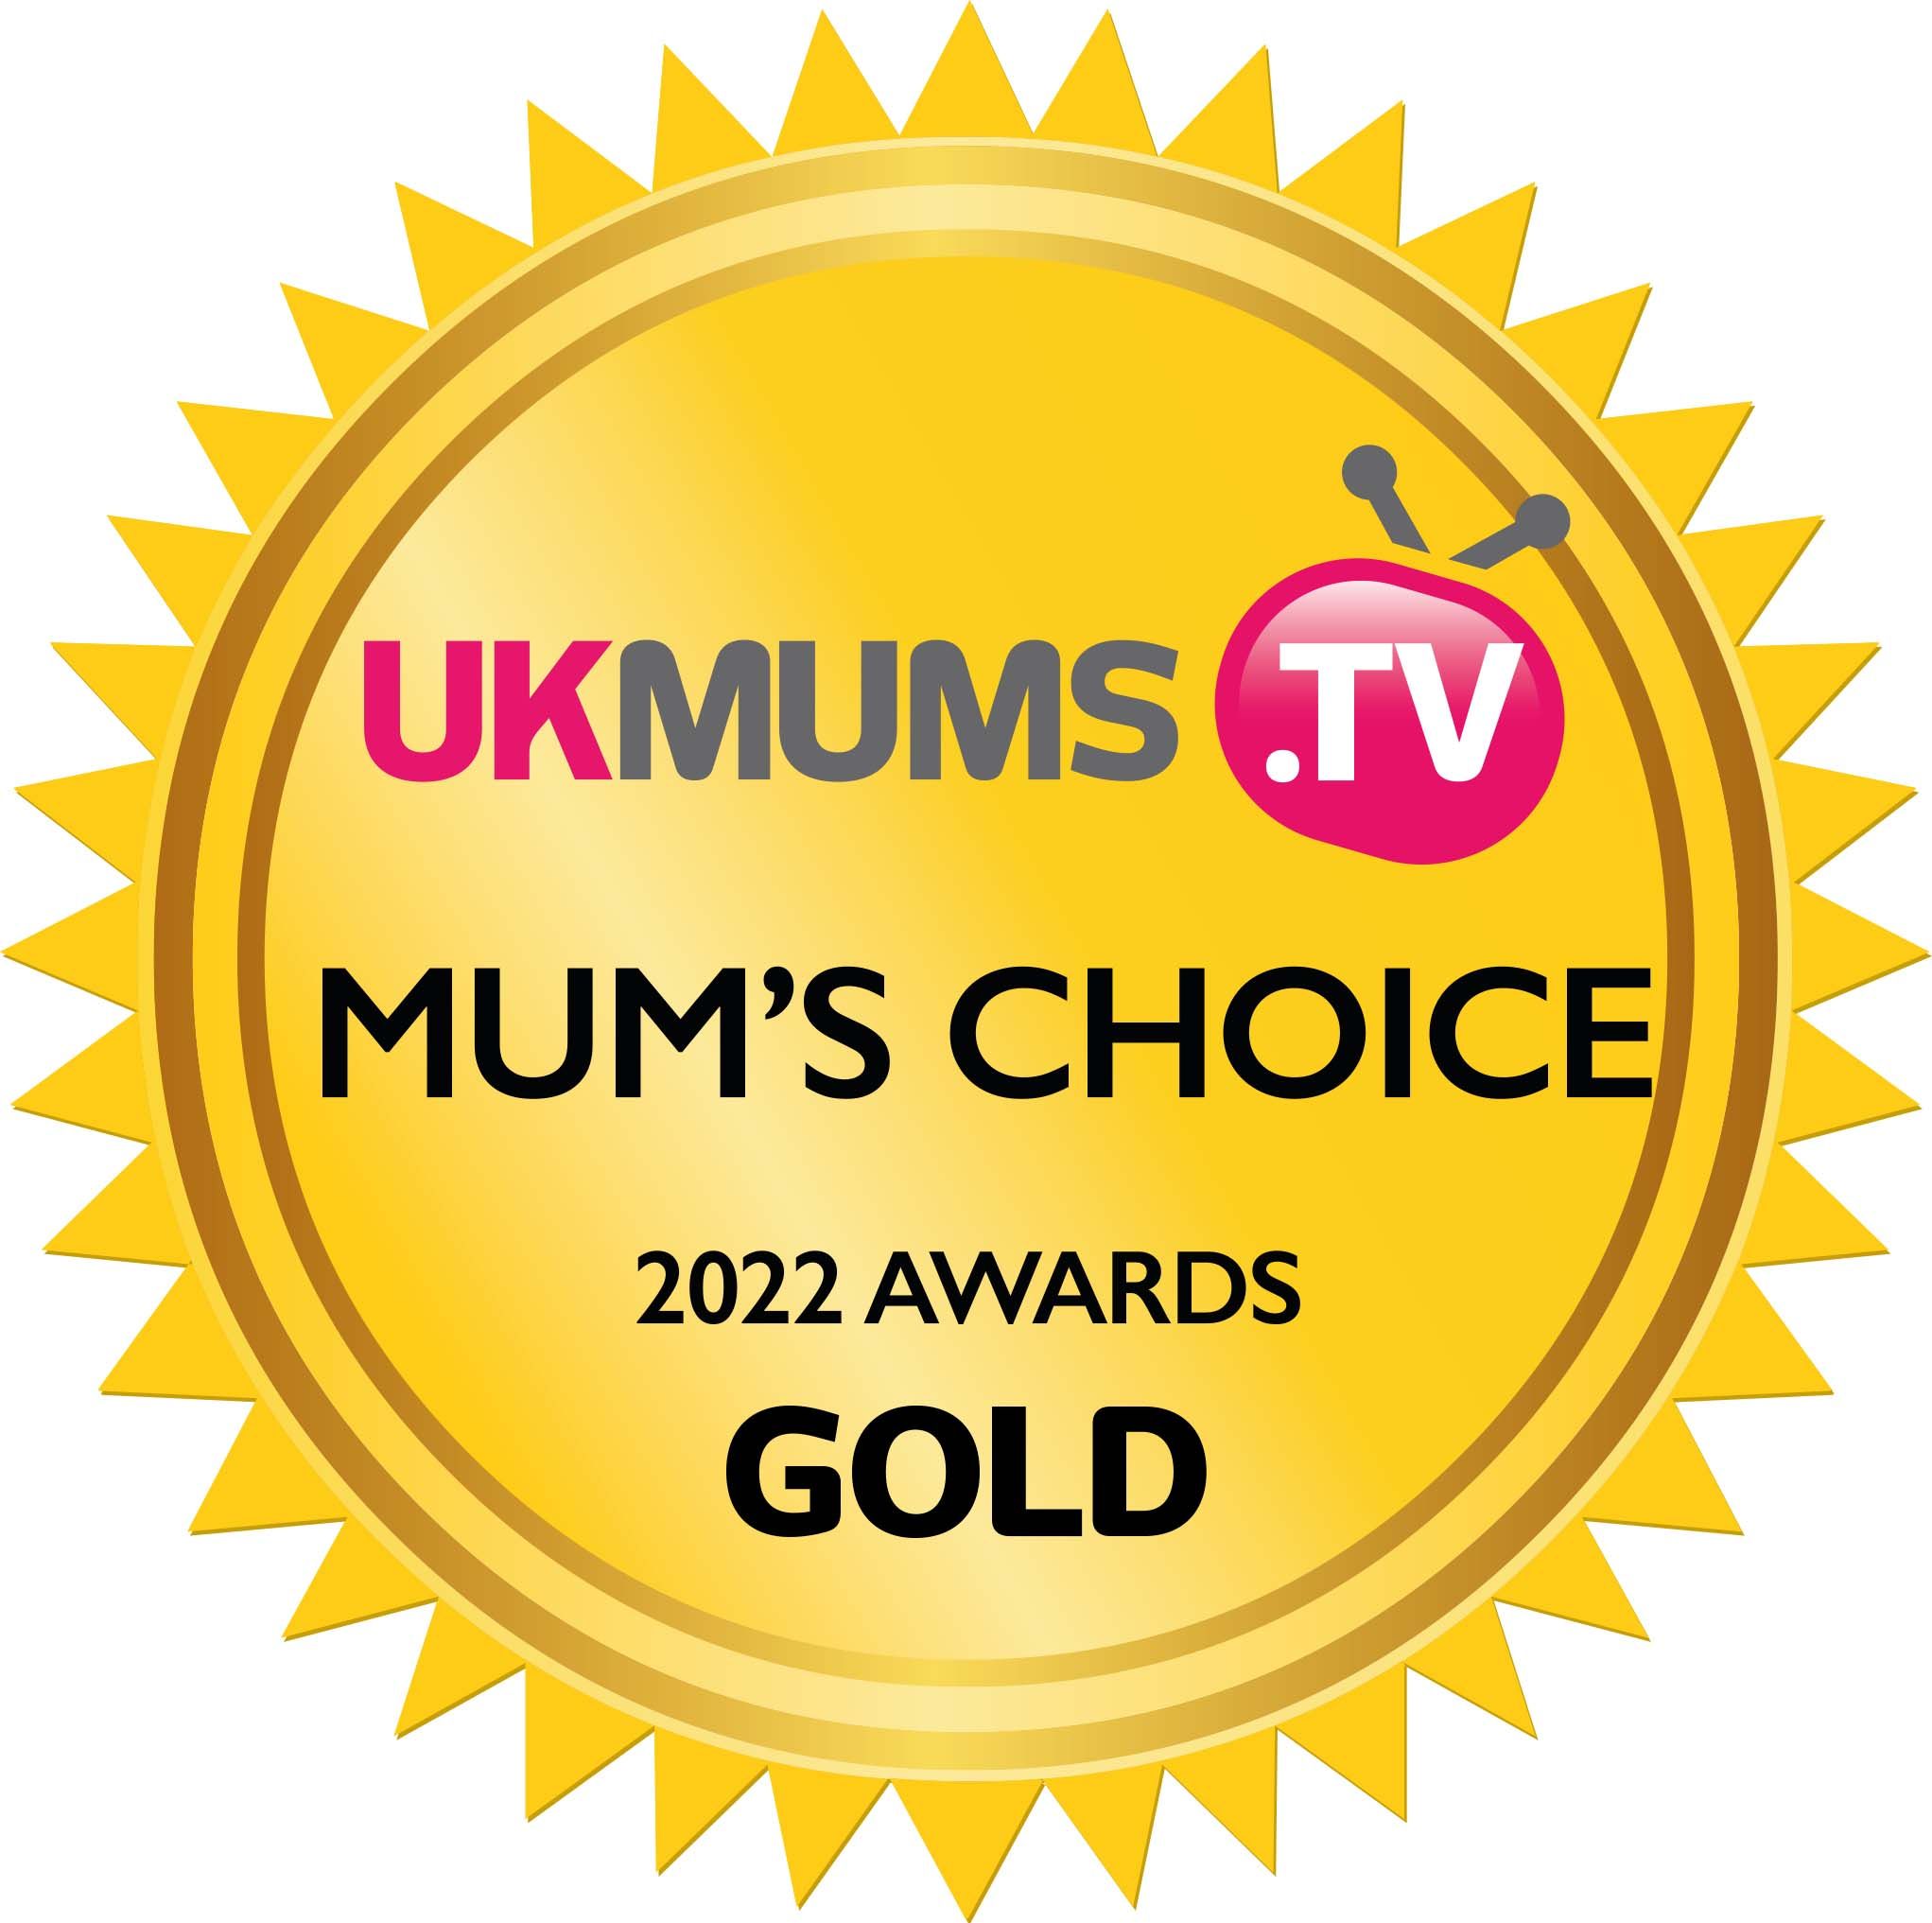 Gold Award Best Mum & family Product 2022